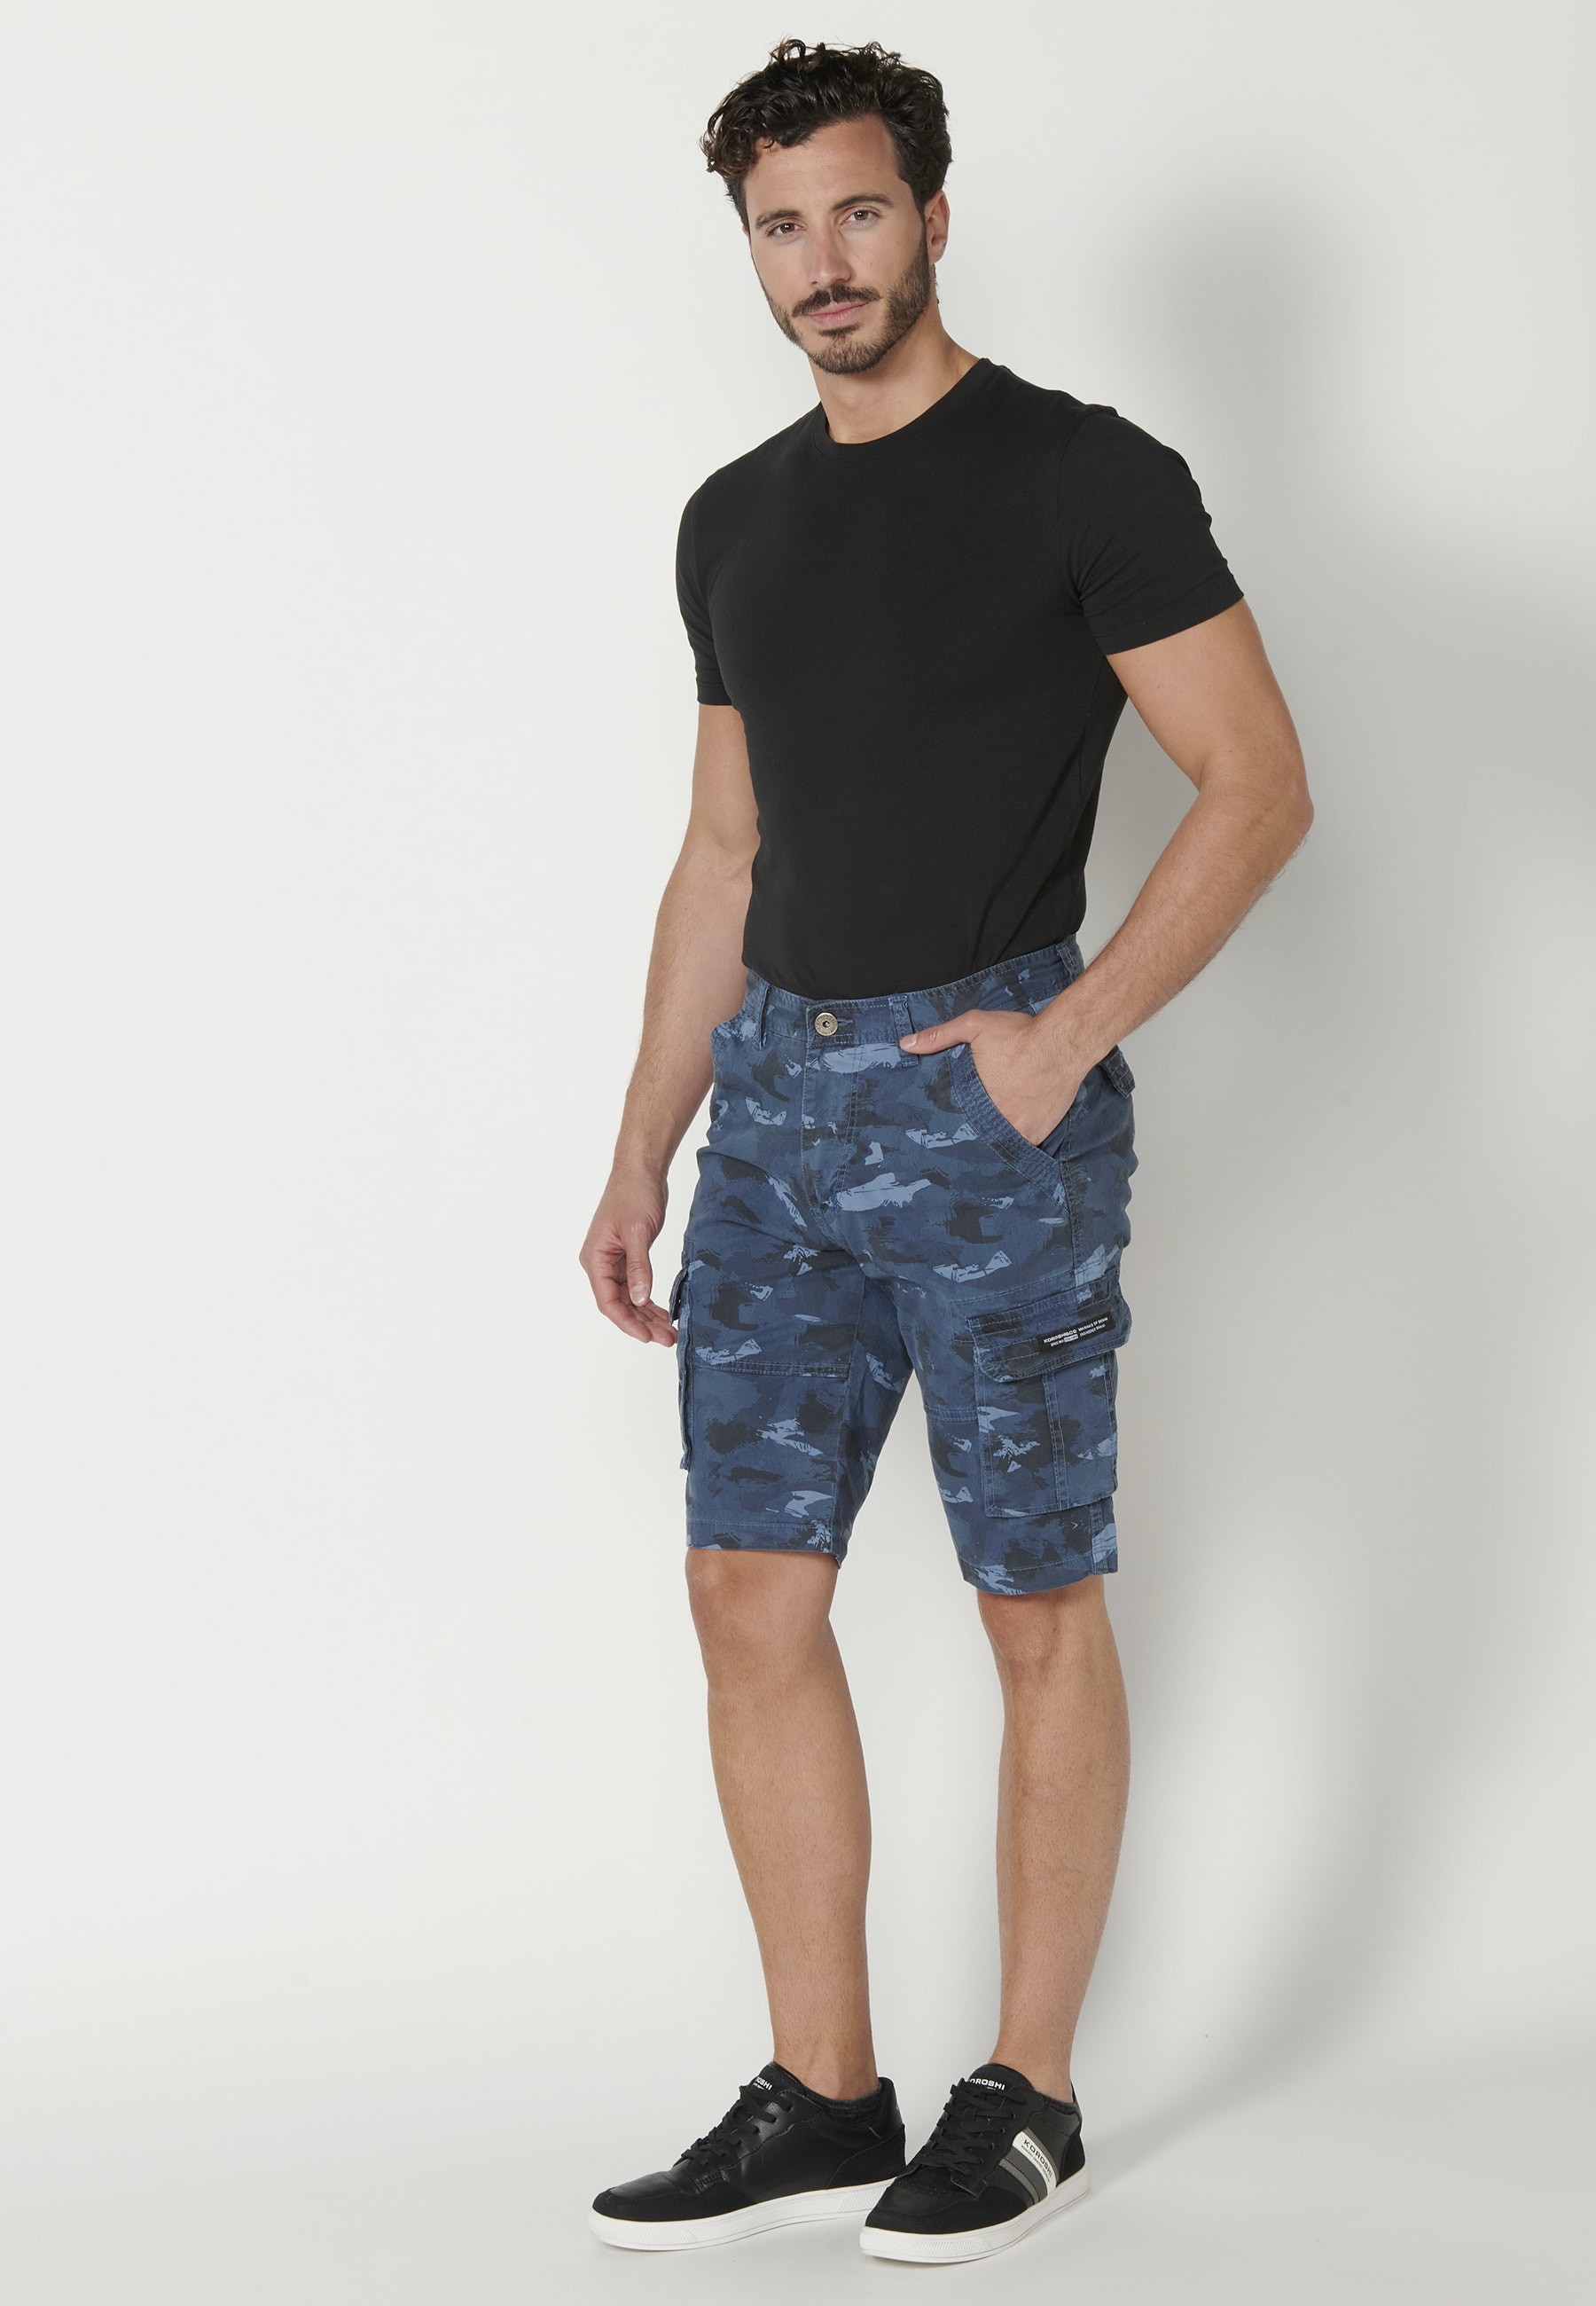 Blue cargo style Bermuda shorts for Men